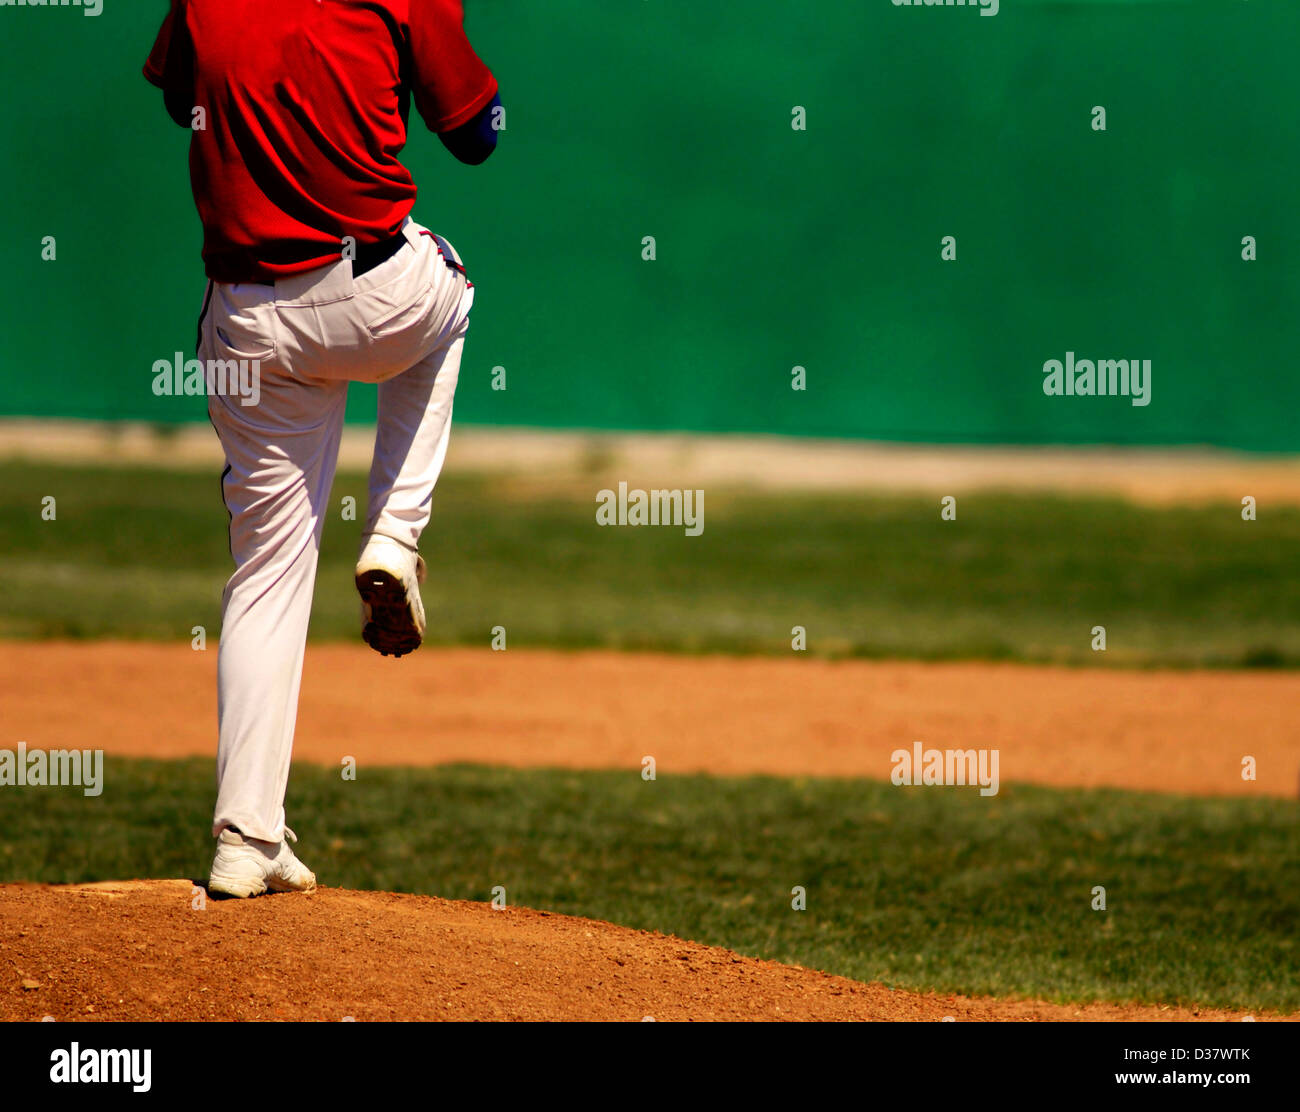 Baseball player wearing uniform throwing baseball Stock Photo